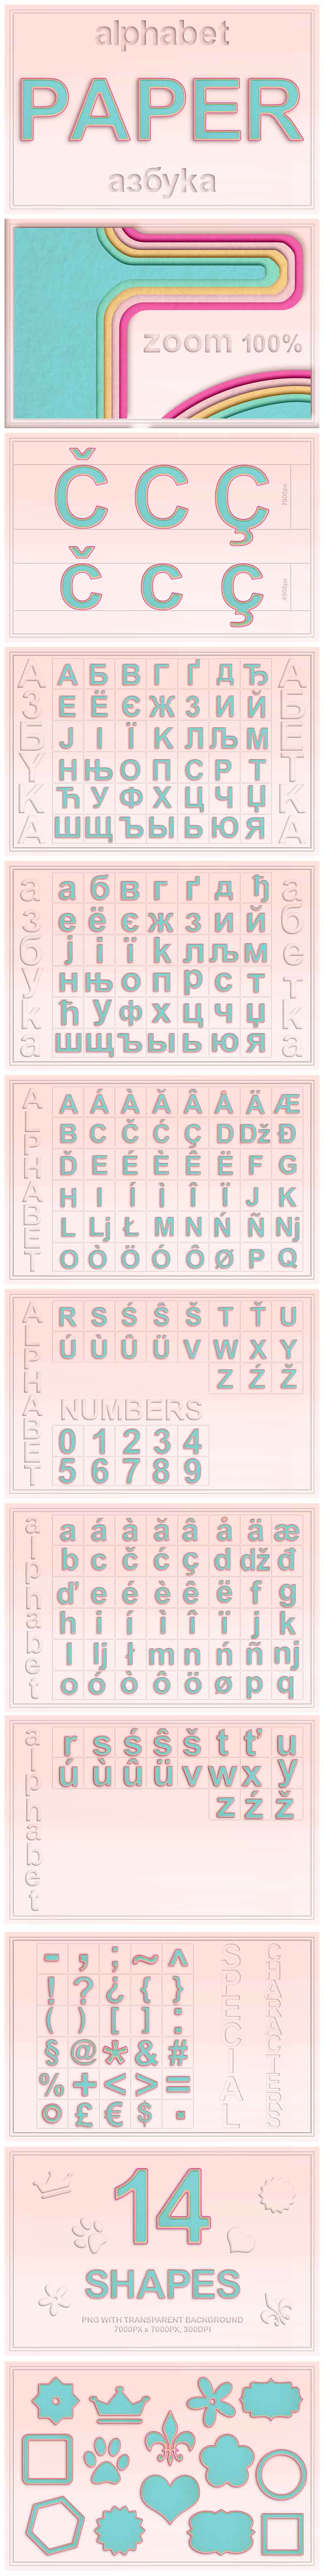 Huge Graphic Bundle Alphabet With 1000 Elements 25 Master Bundles